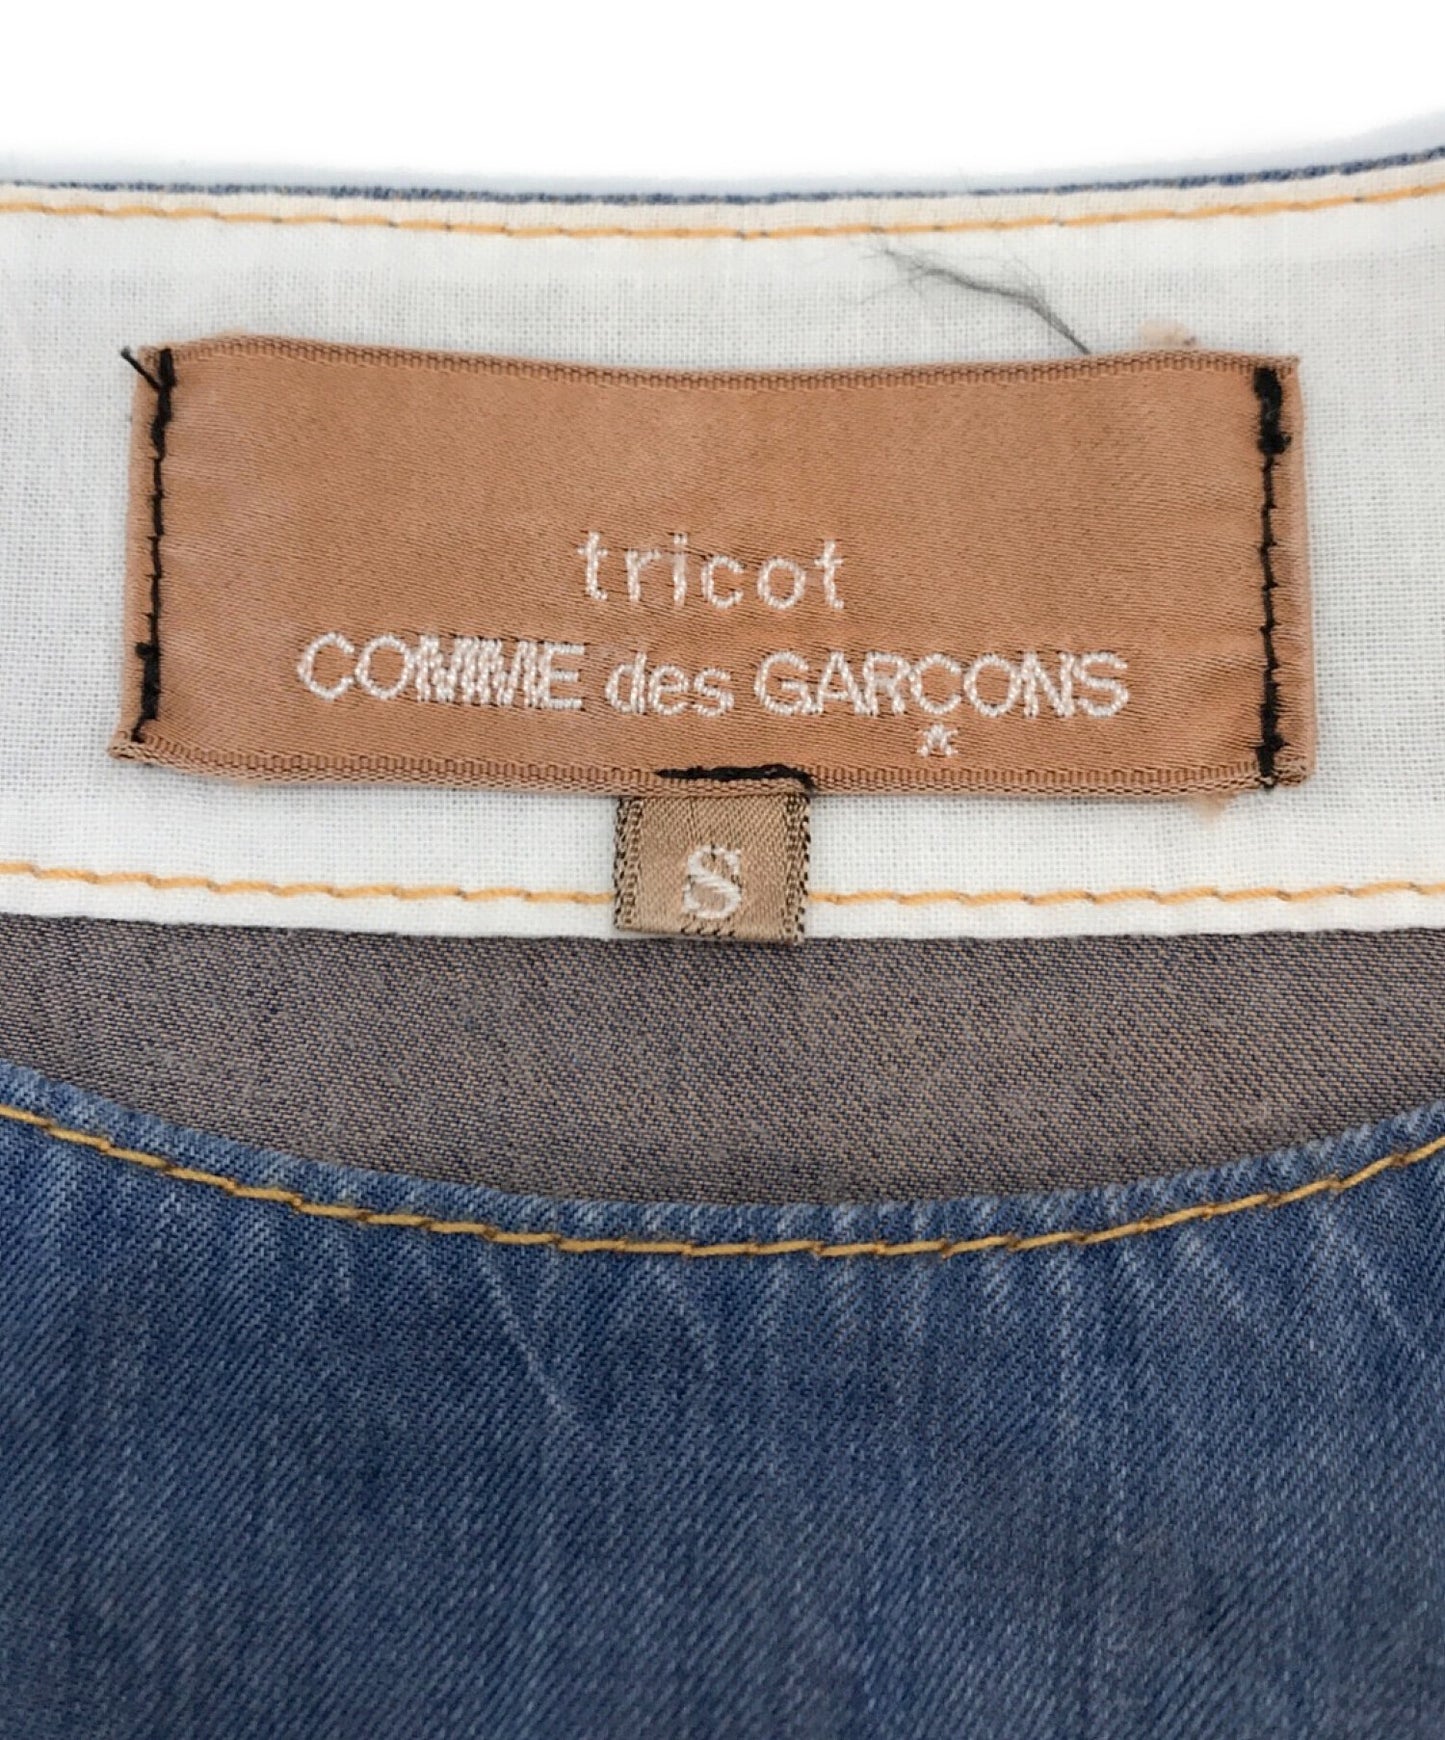 Tricot Comme des Garcons Dungaree Pocket Design 3/4長袖頂TA-B012